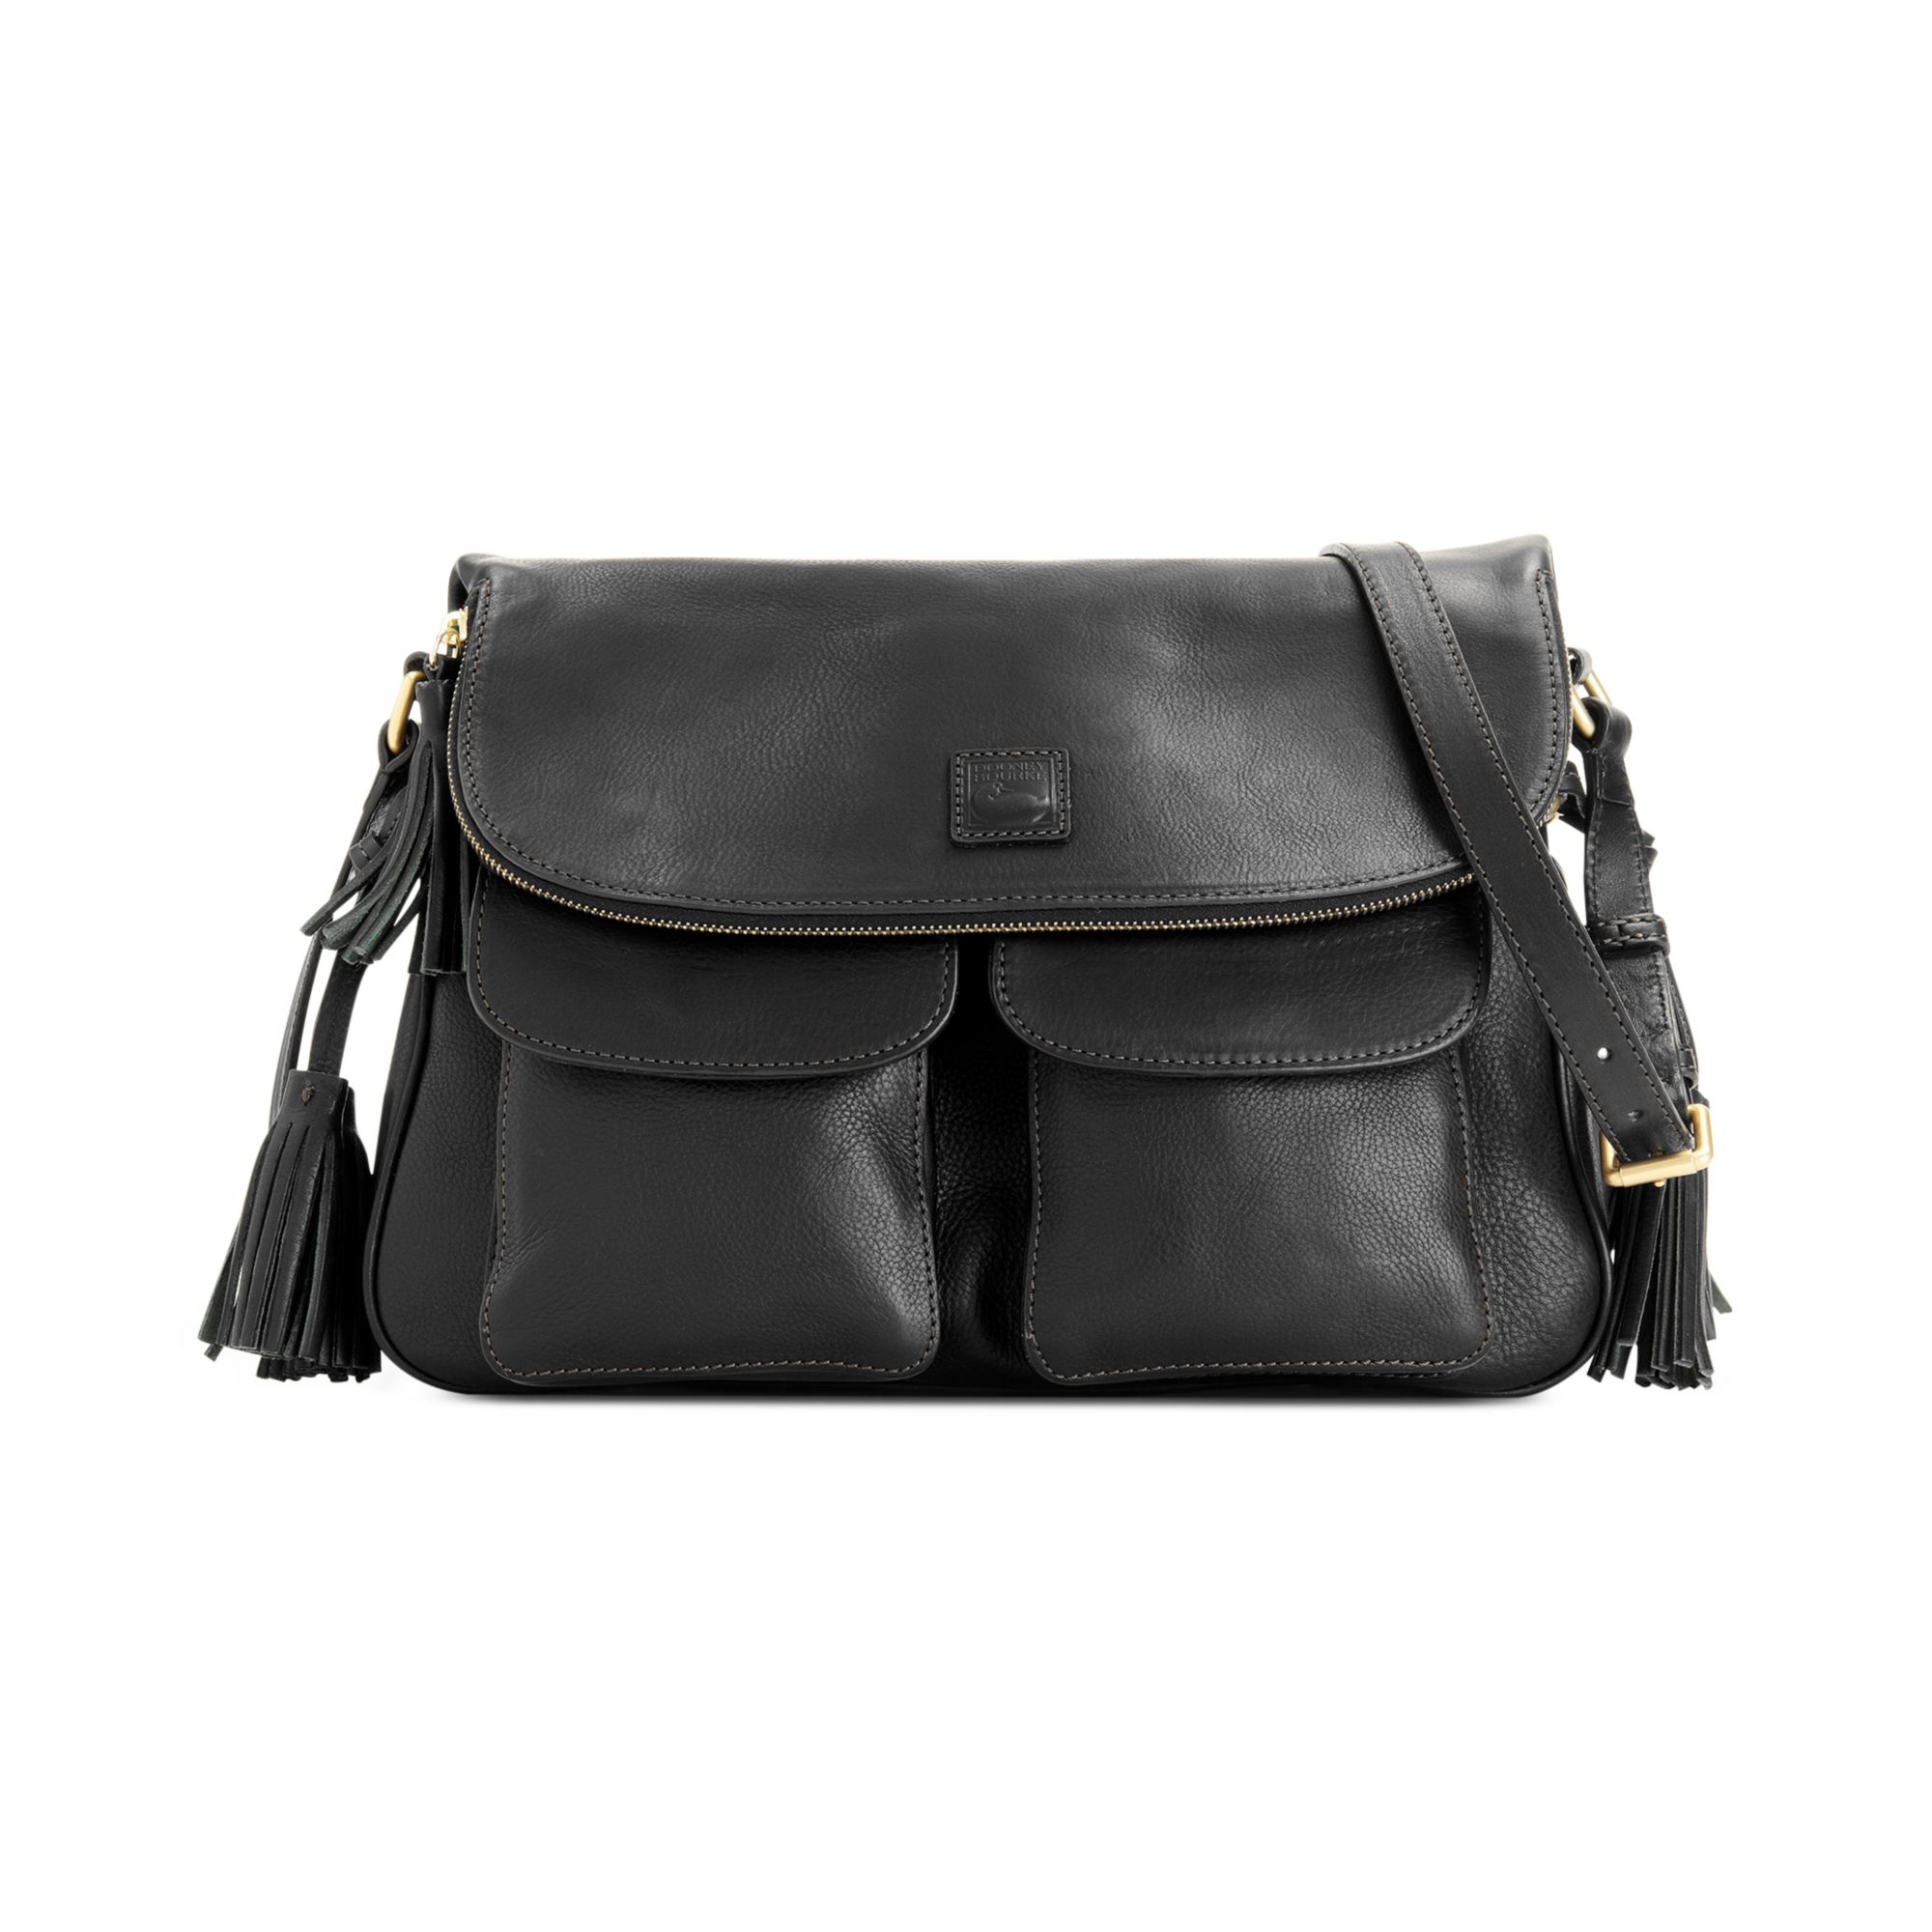 Lyst - Dooney & bourke Florentine Zip Flap Foldover Bag in Black